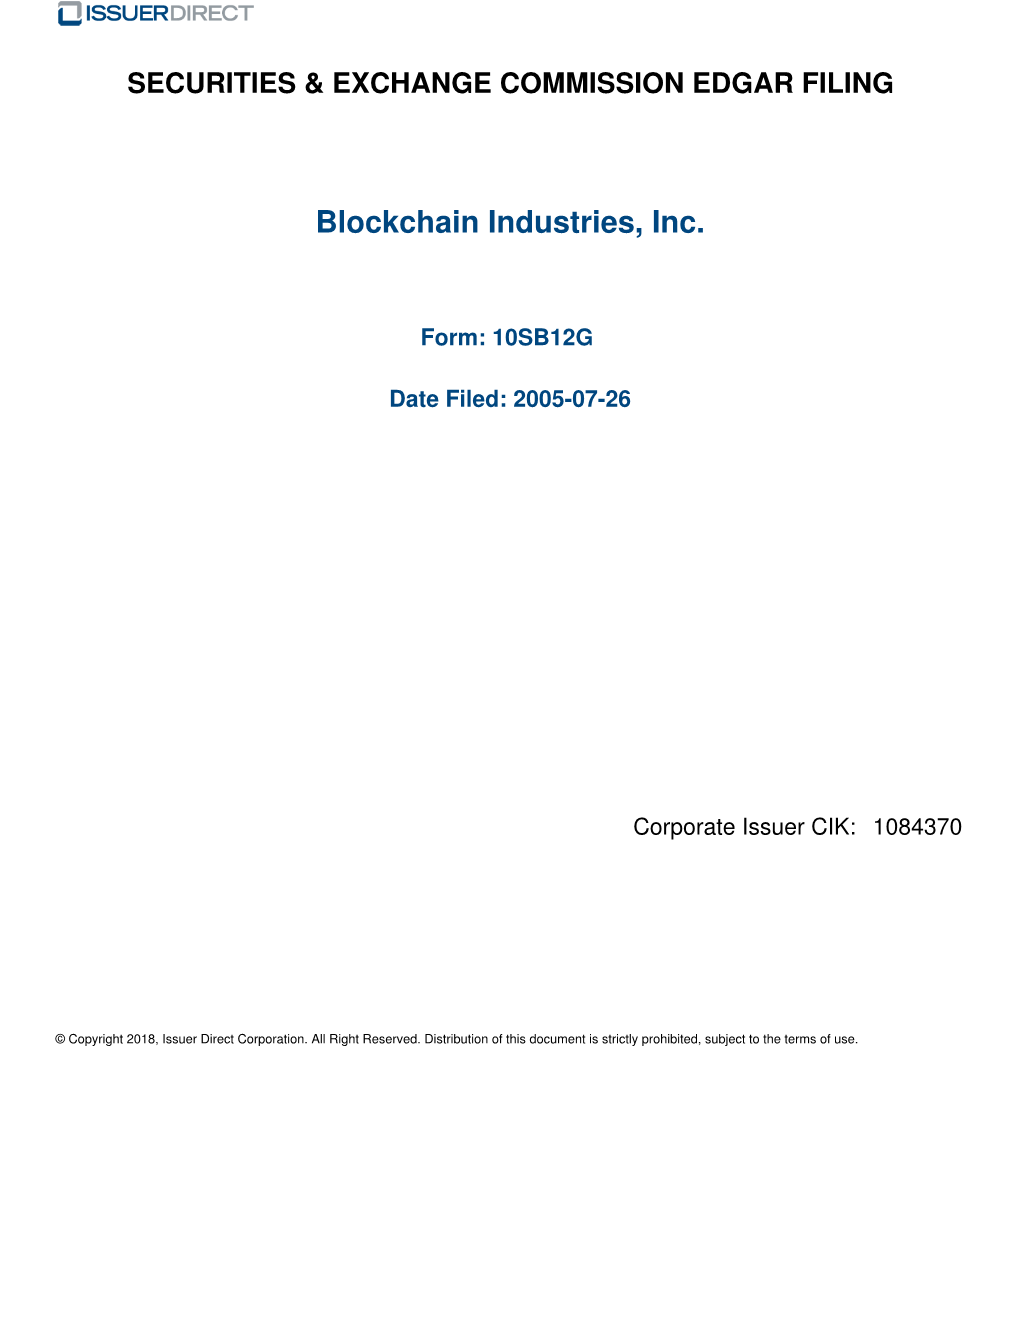 Blockchain Industries, Inc